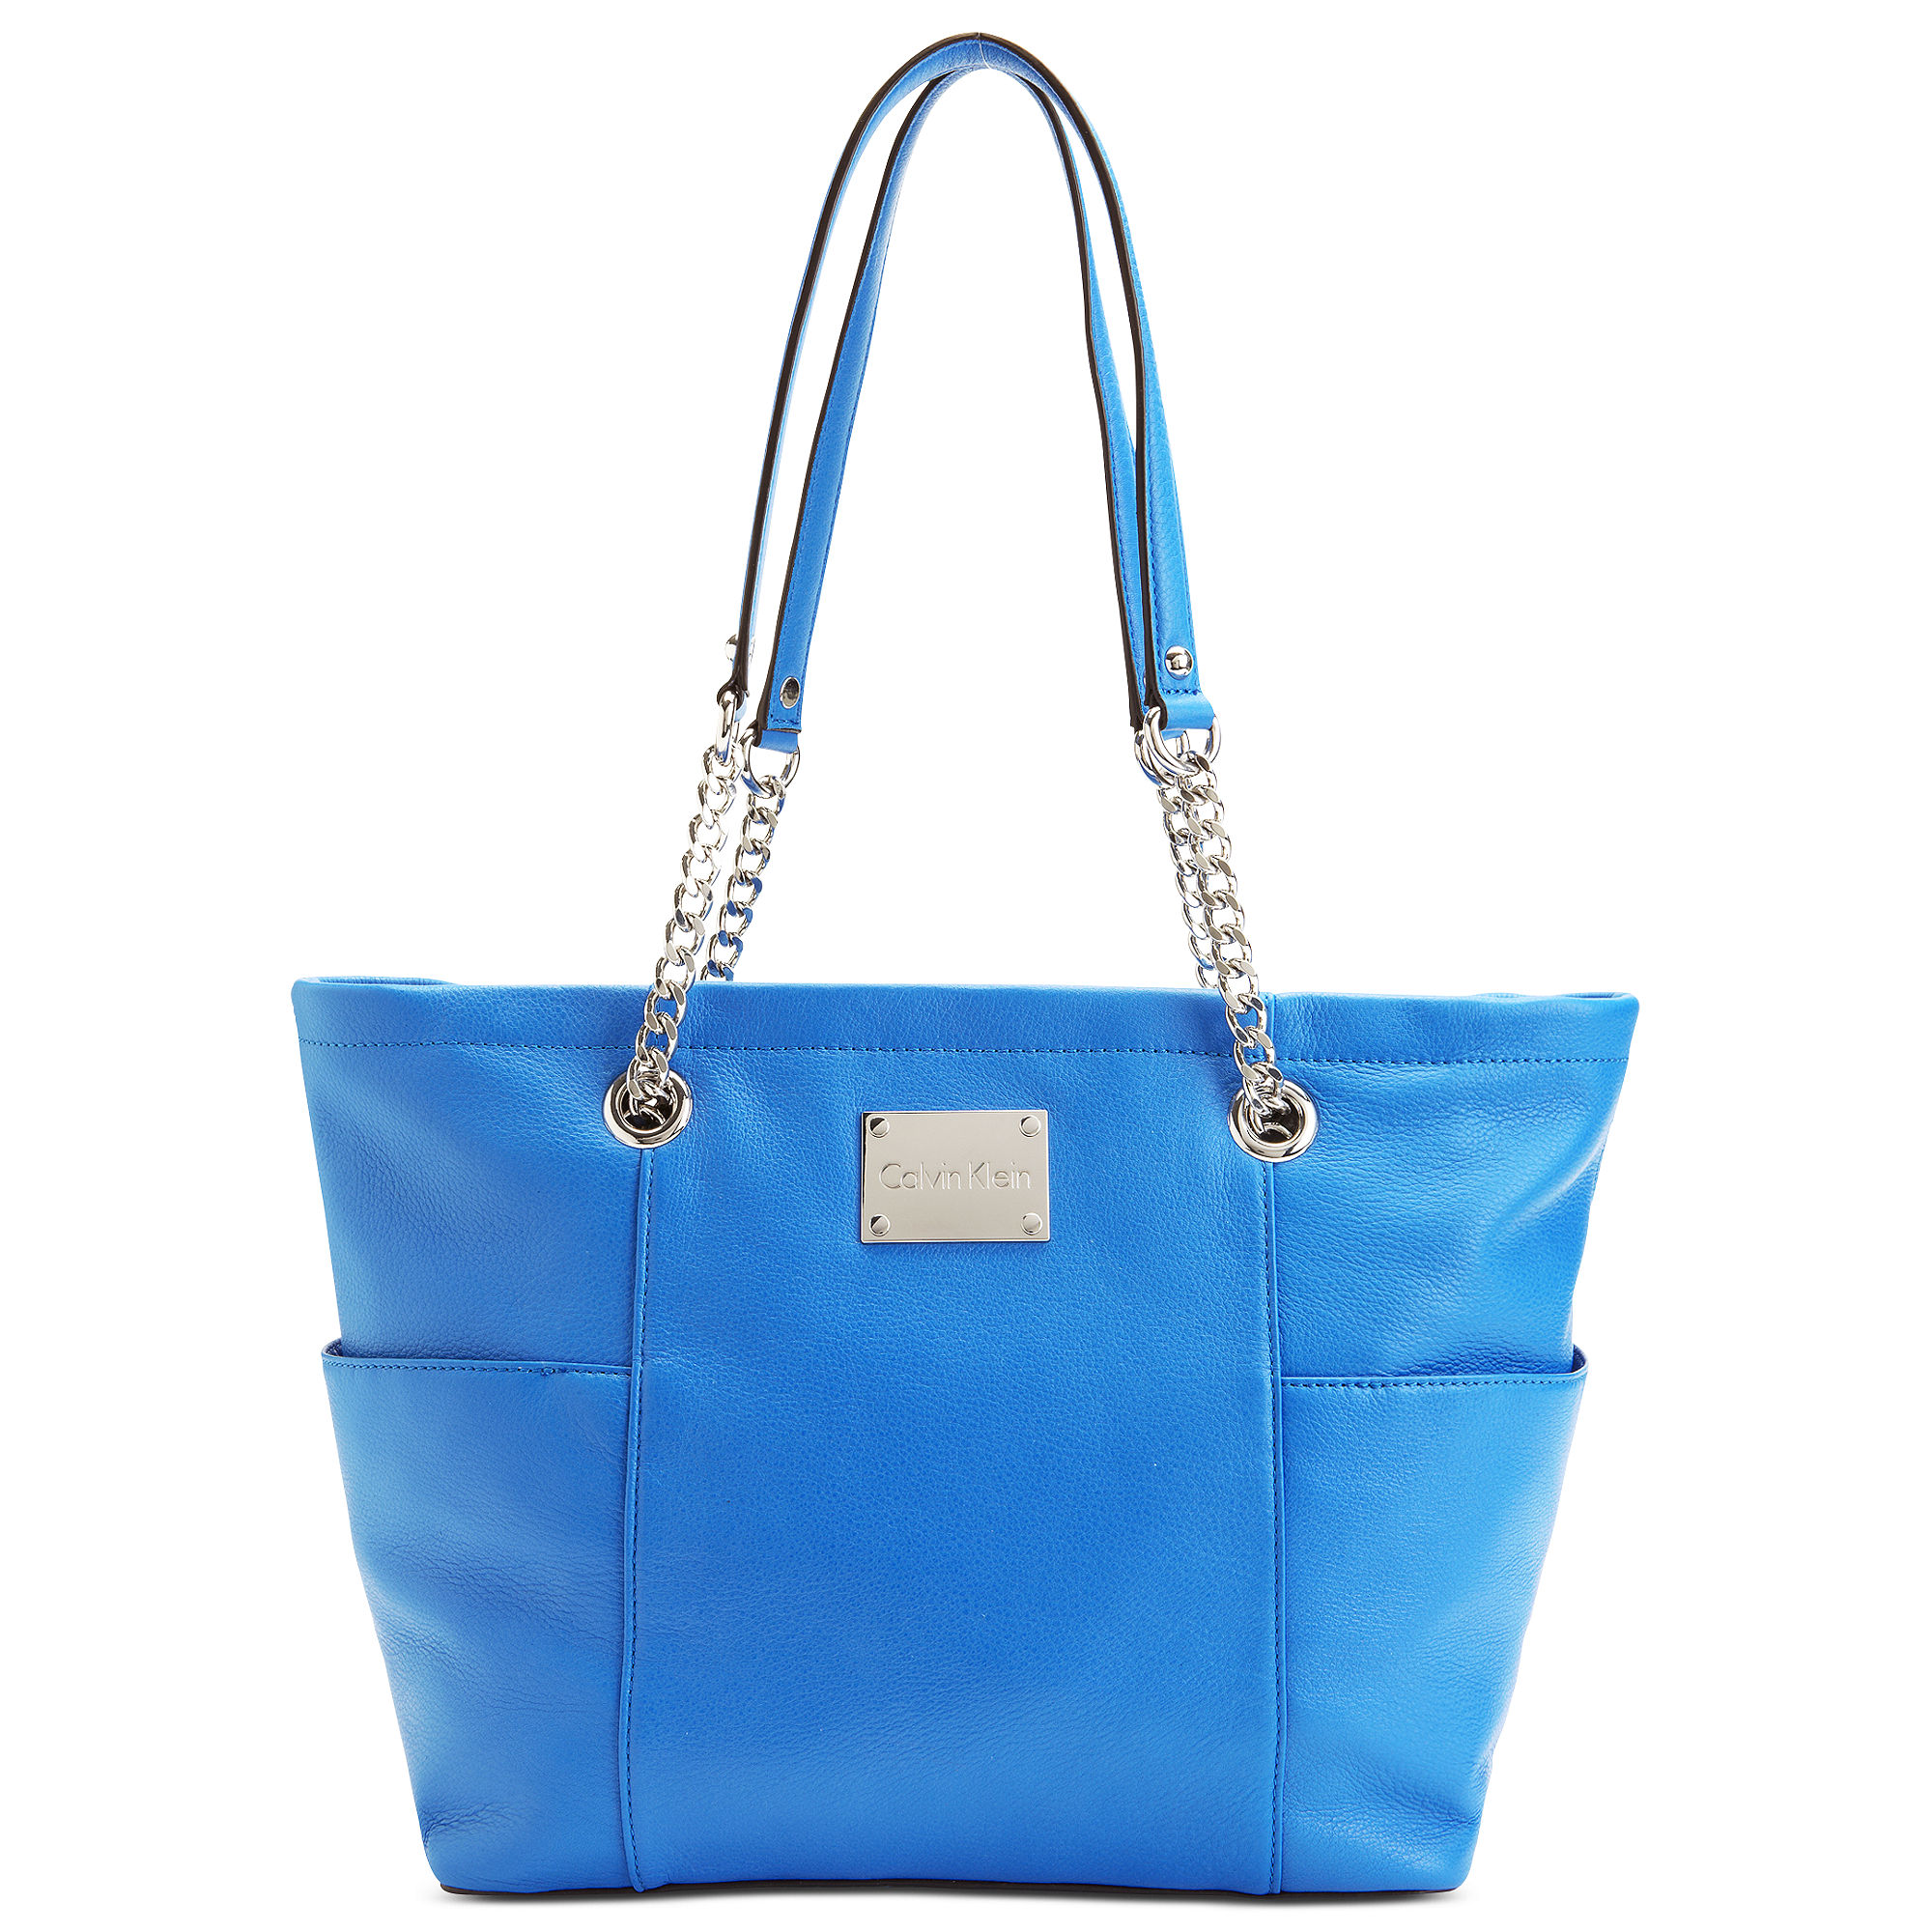 Calvin Klein Macys Leather Tote in Blue (cornflower blue) | Lyst